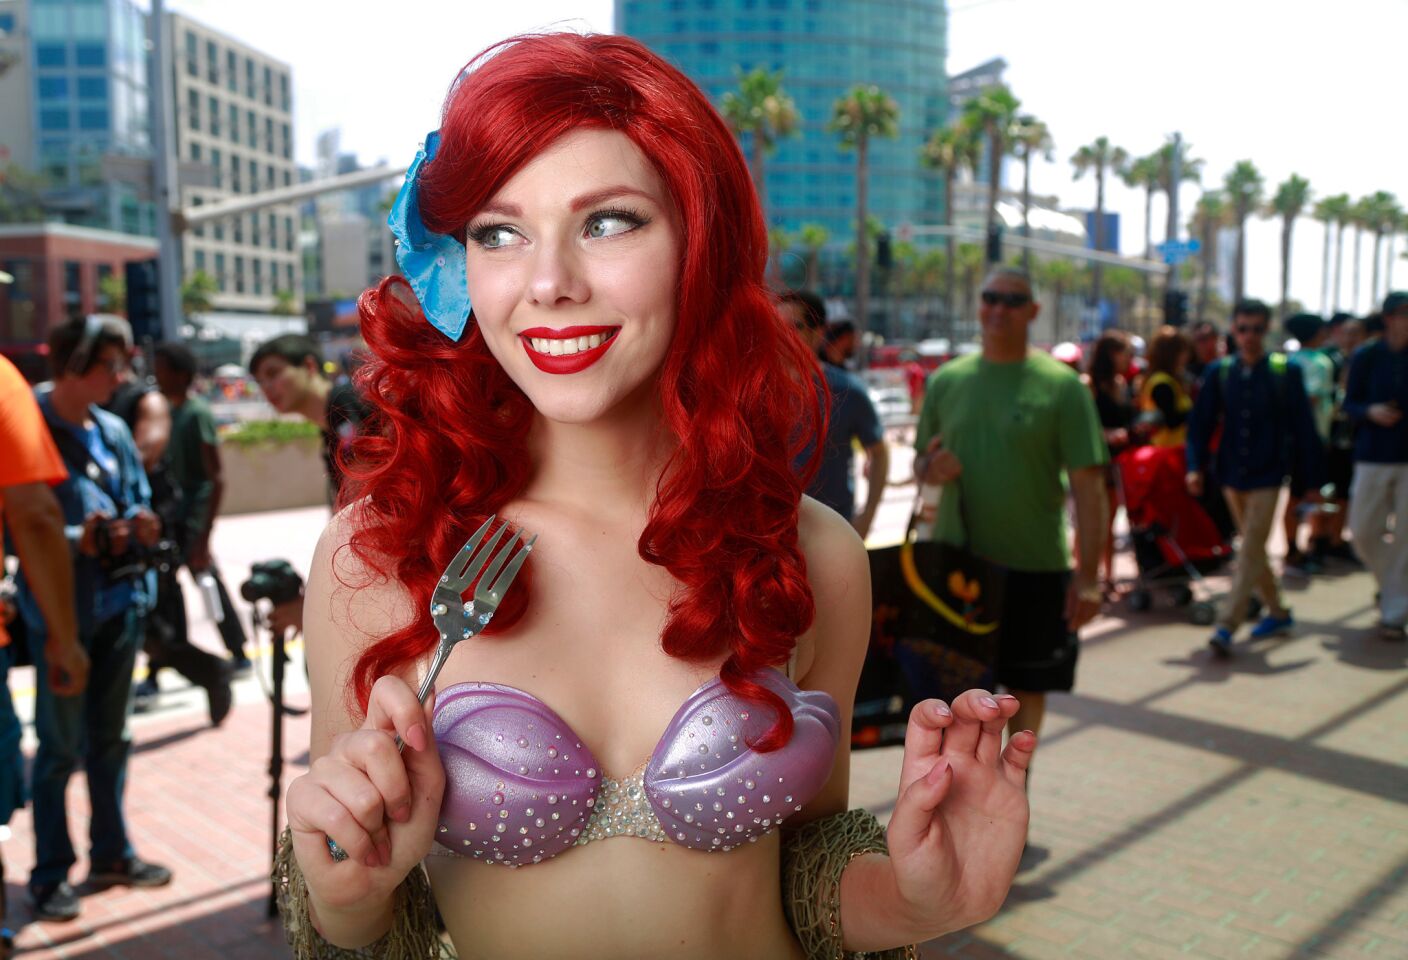 Kaite Samuel of Santa Barbara dressed as Ariel at Comic-Con in San Diego on July 20.